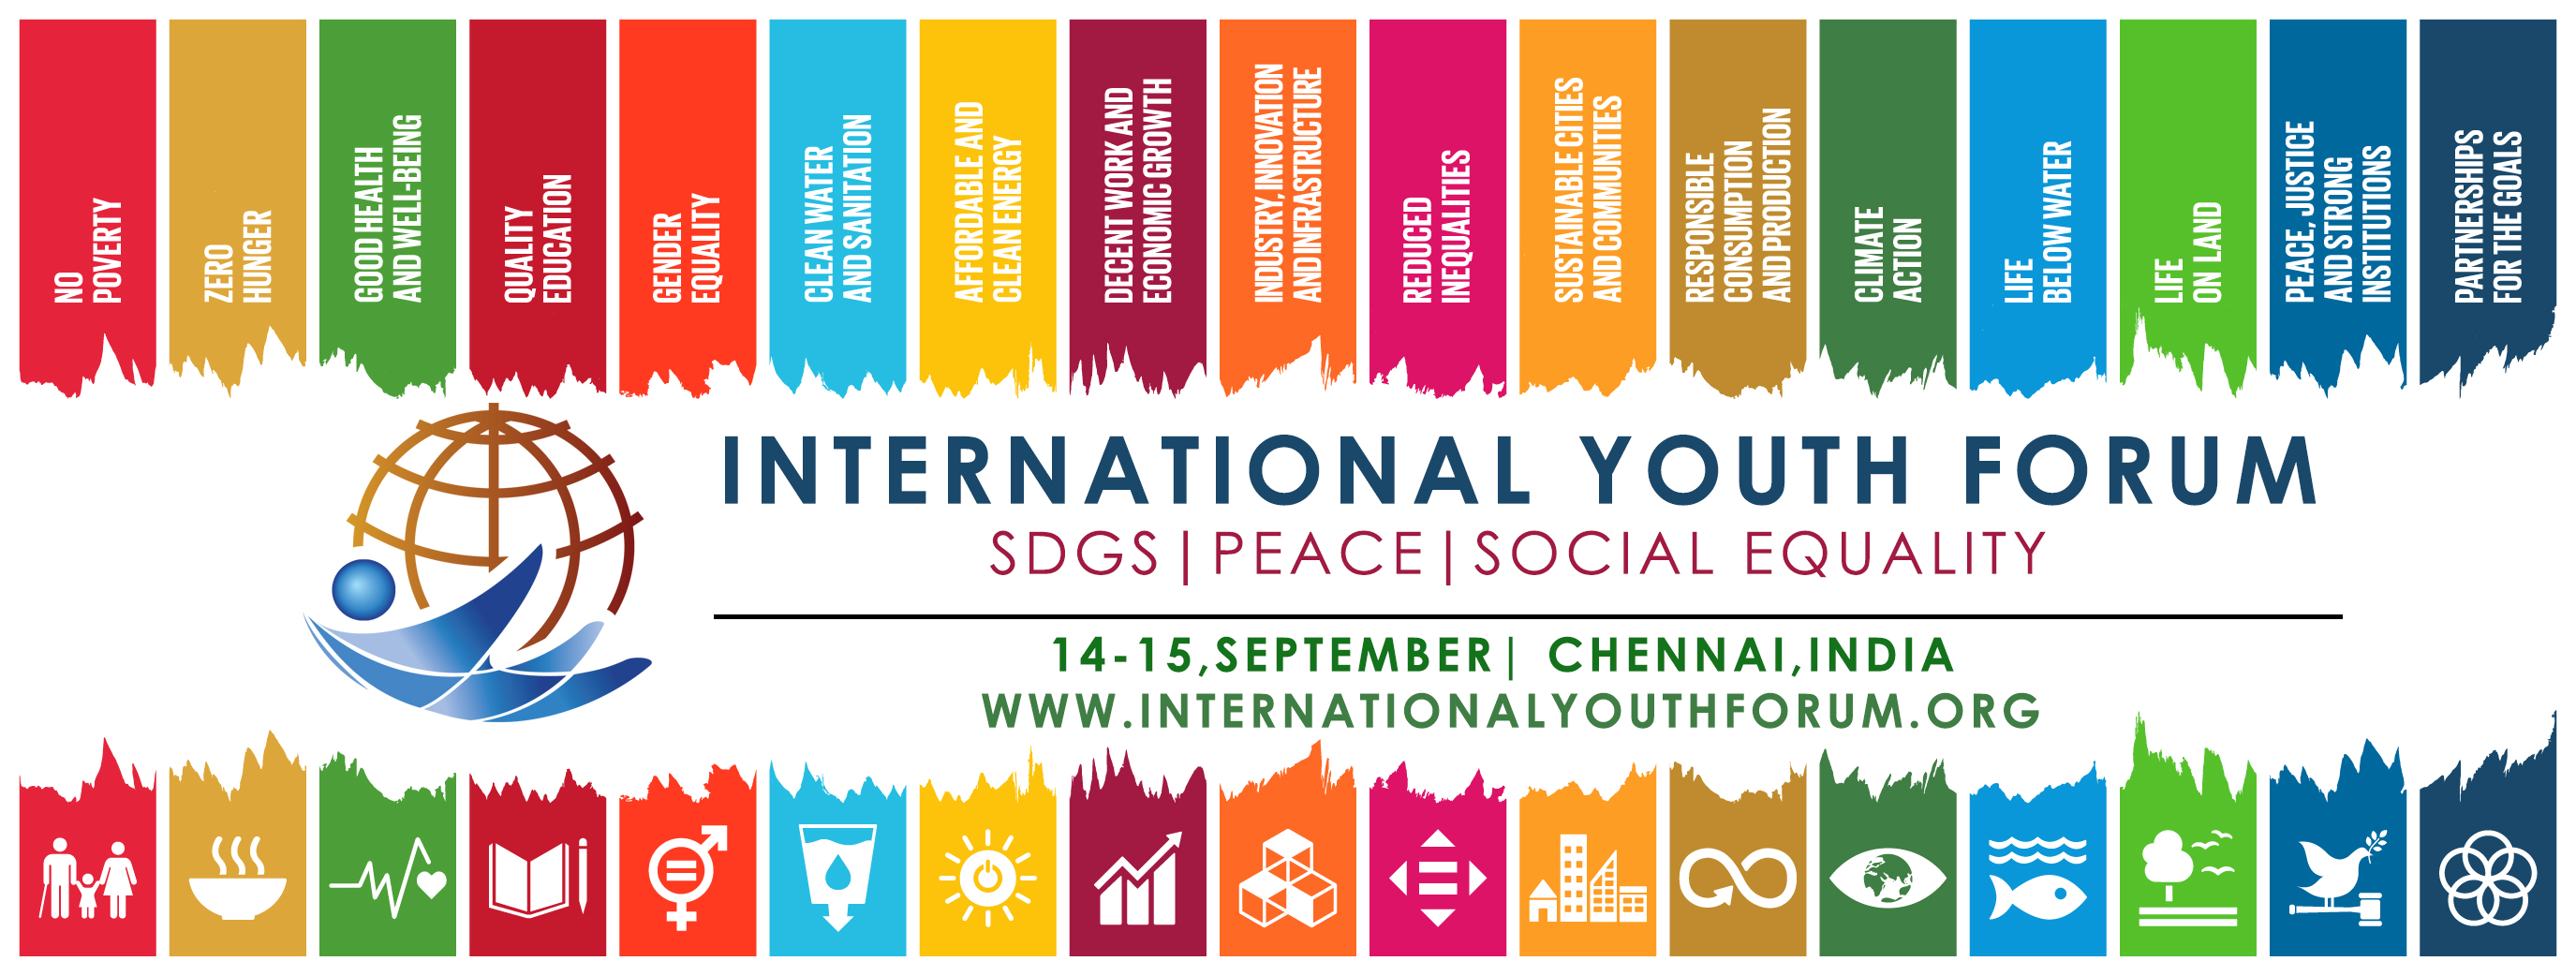 International Youth Forum 2019 on Peace, Social Justice & SDGs, Chennai, Tamil Nadu, India